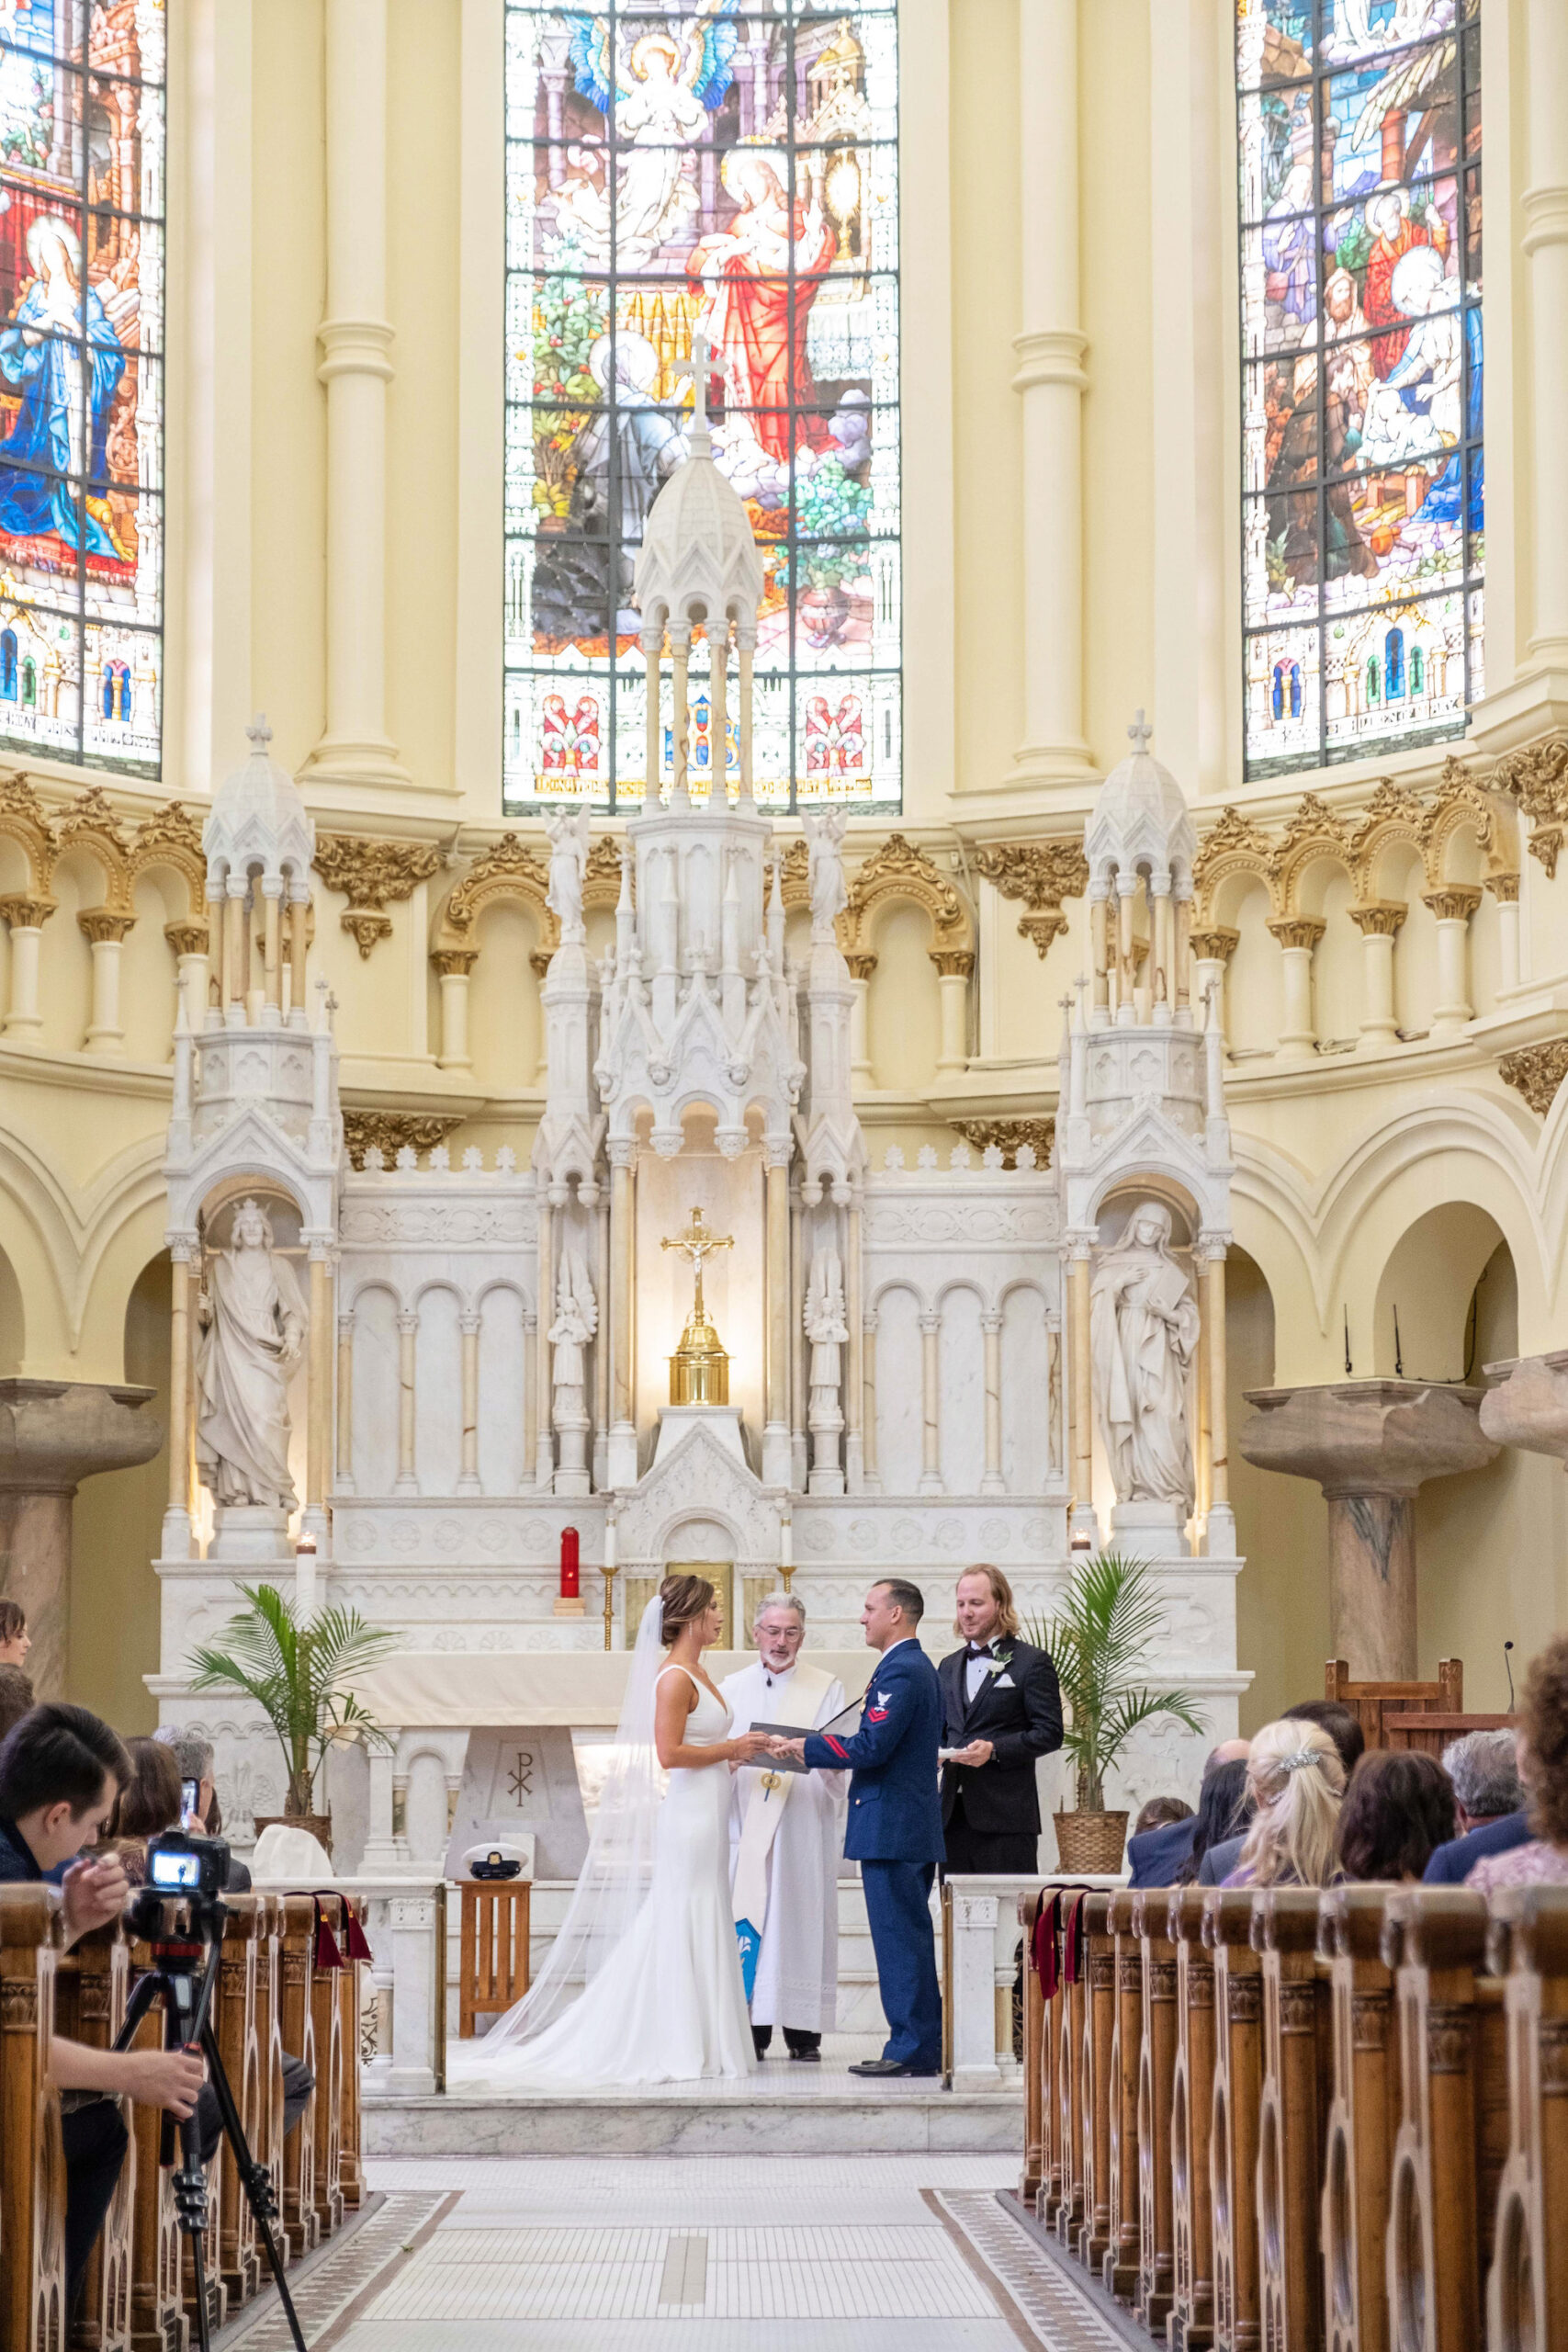 Tampa Bay Sacred Heart Catholic Church Wedding Venue Inspiration